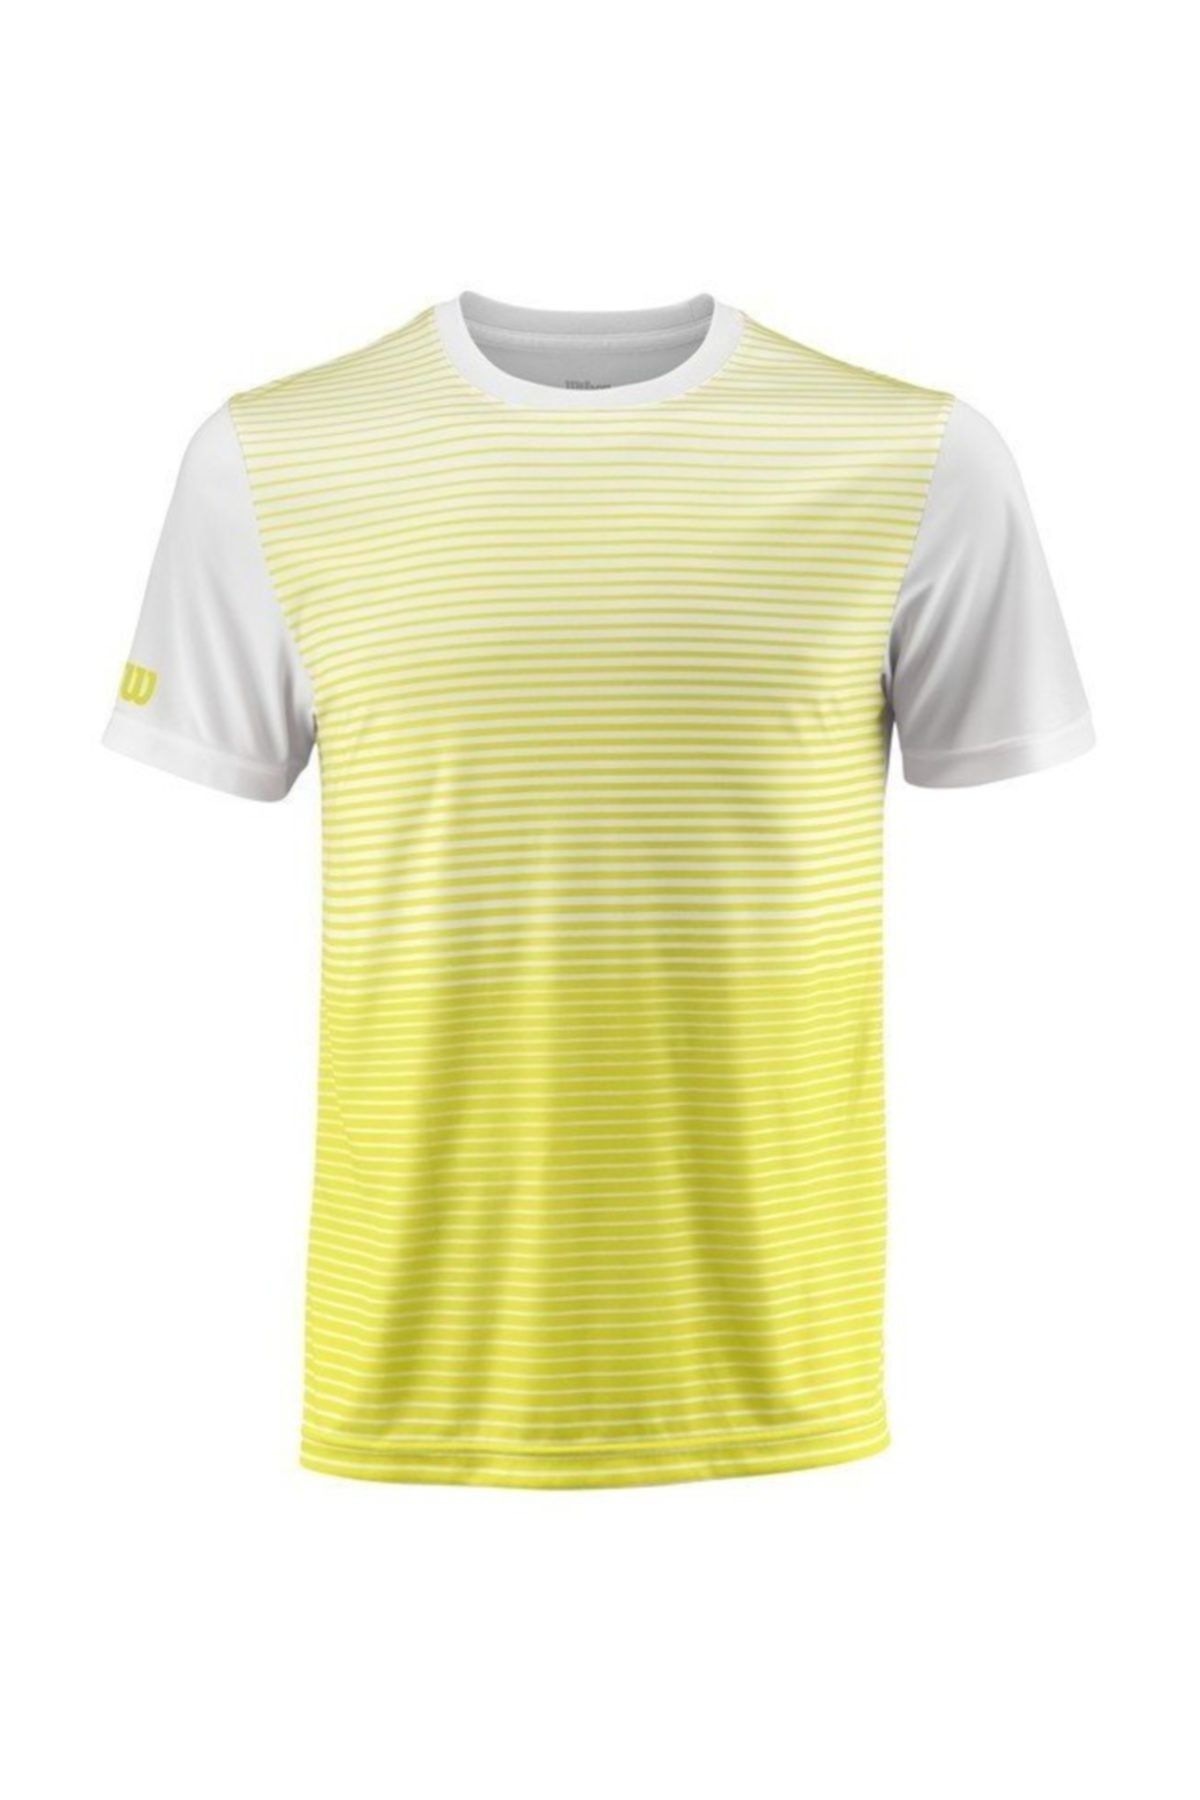 Wilson Team Striped Crew Sarı Erkek T-shirt Wra769705